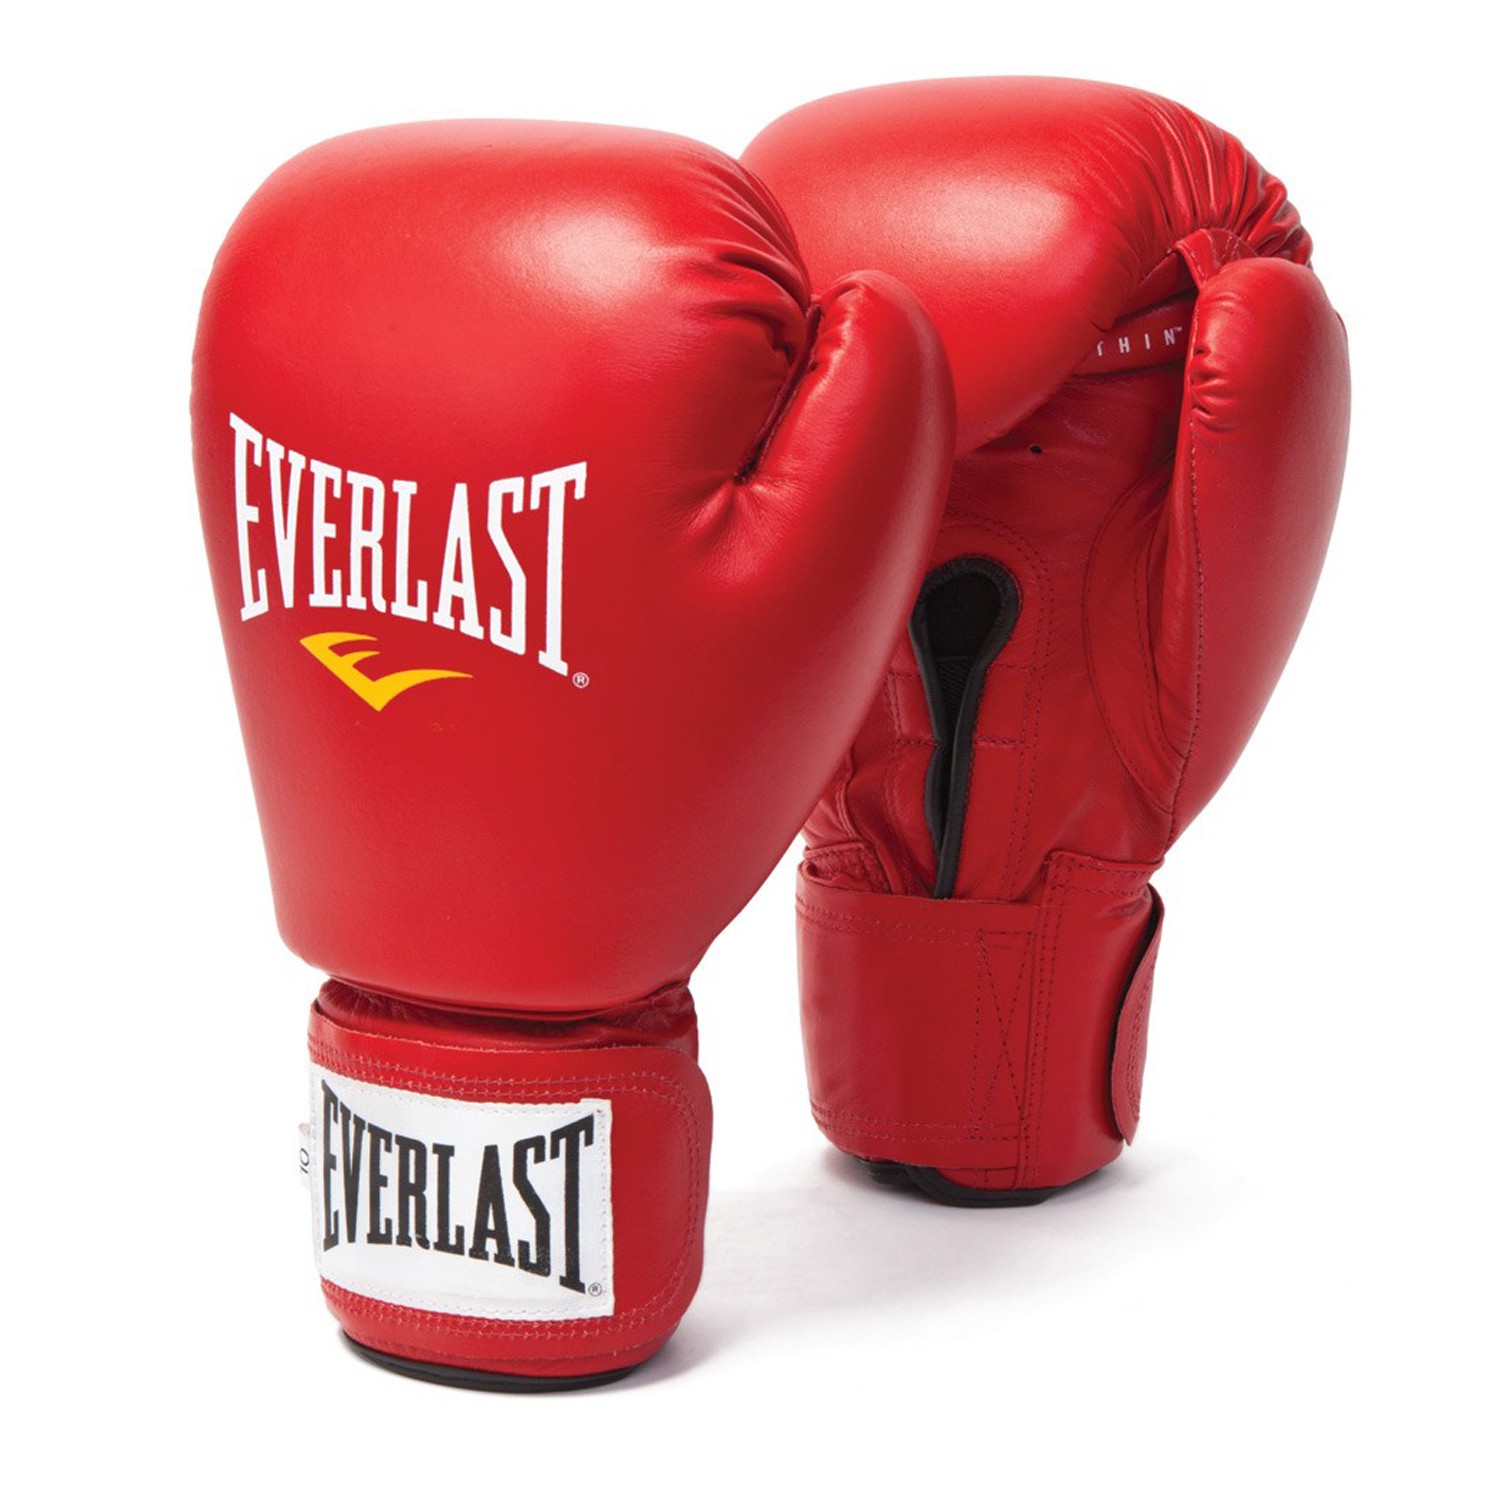 Купить битье. Боксерские перчатки Everlast amateur Competition PU. Боксёрские перчатки Everlast 12 унций. Перчатки боксерские эверласт 10. Боксерские перчатки Everlast 10 oz.